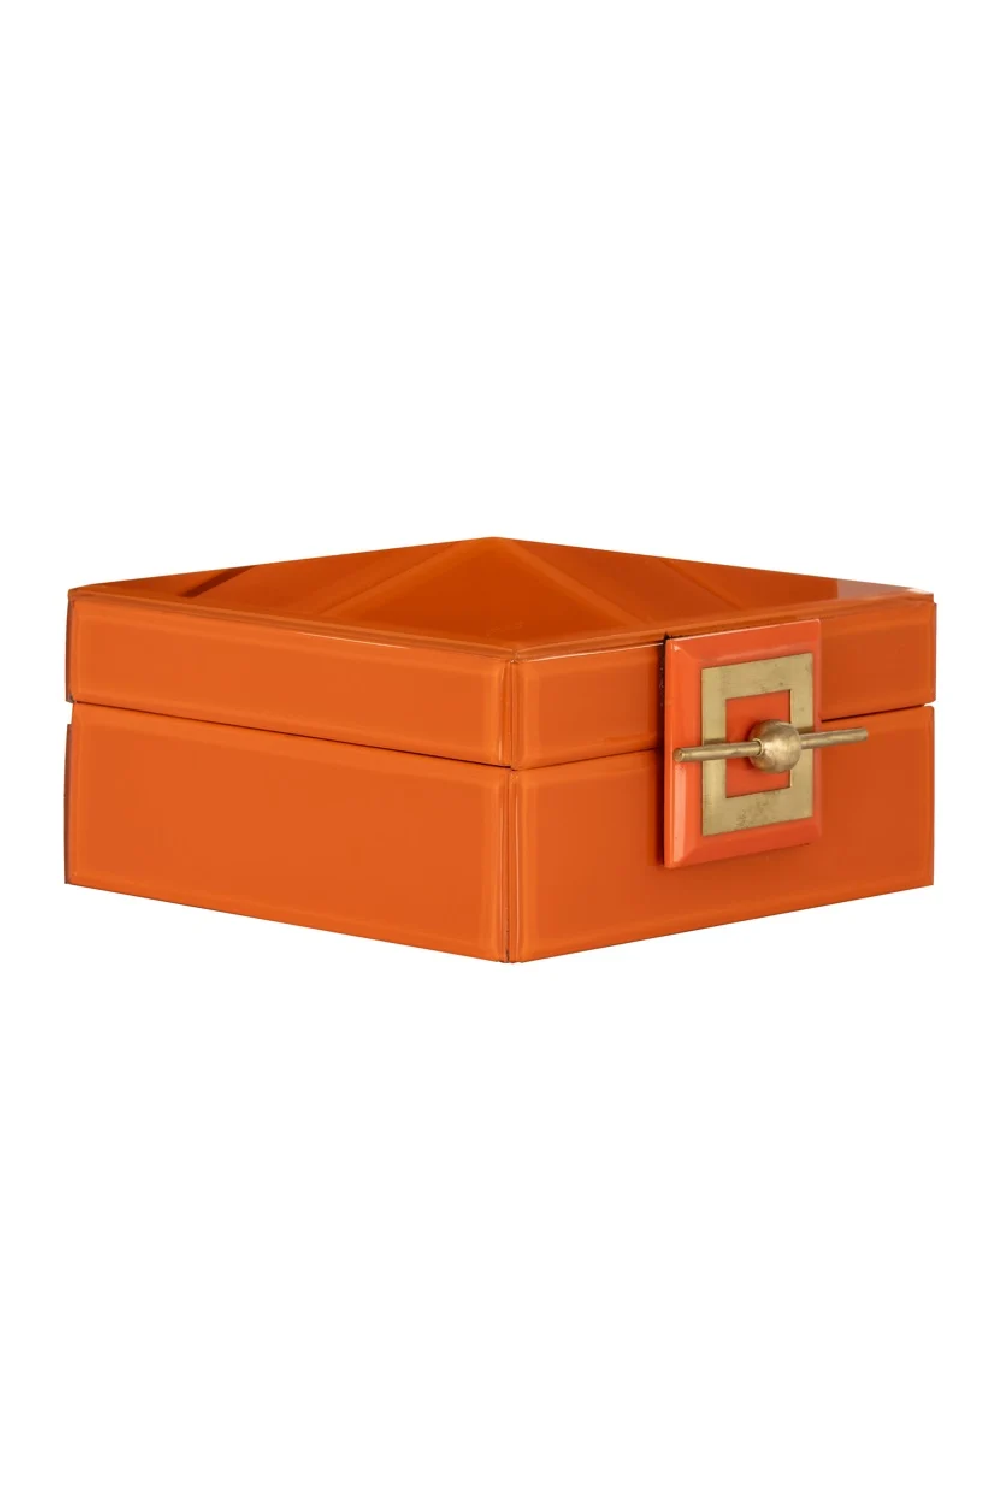 Orange Glass Jewelry Box | OROA Bodine | Oroa.com